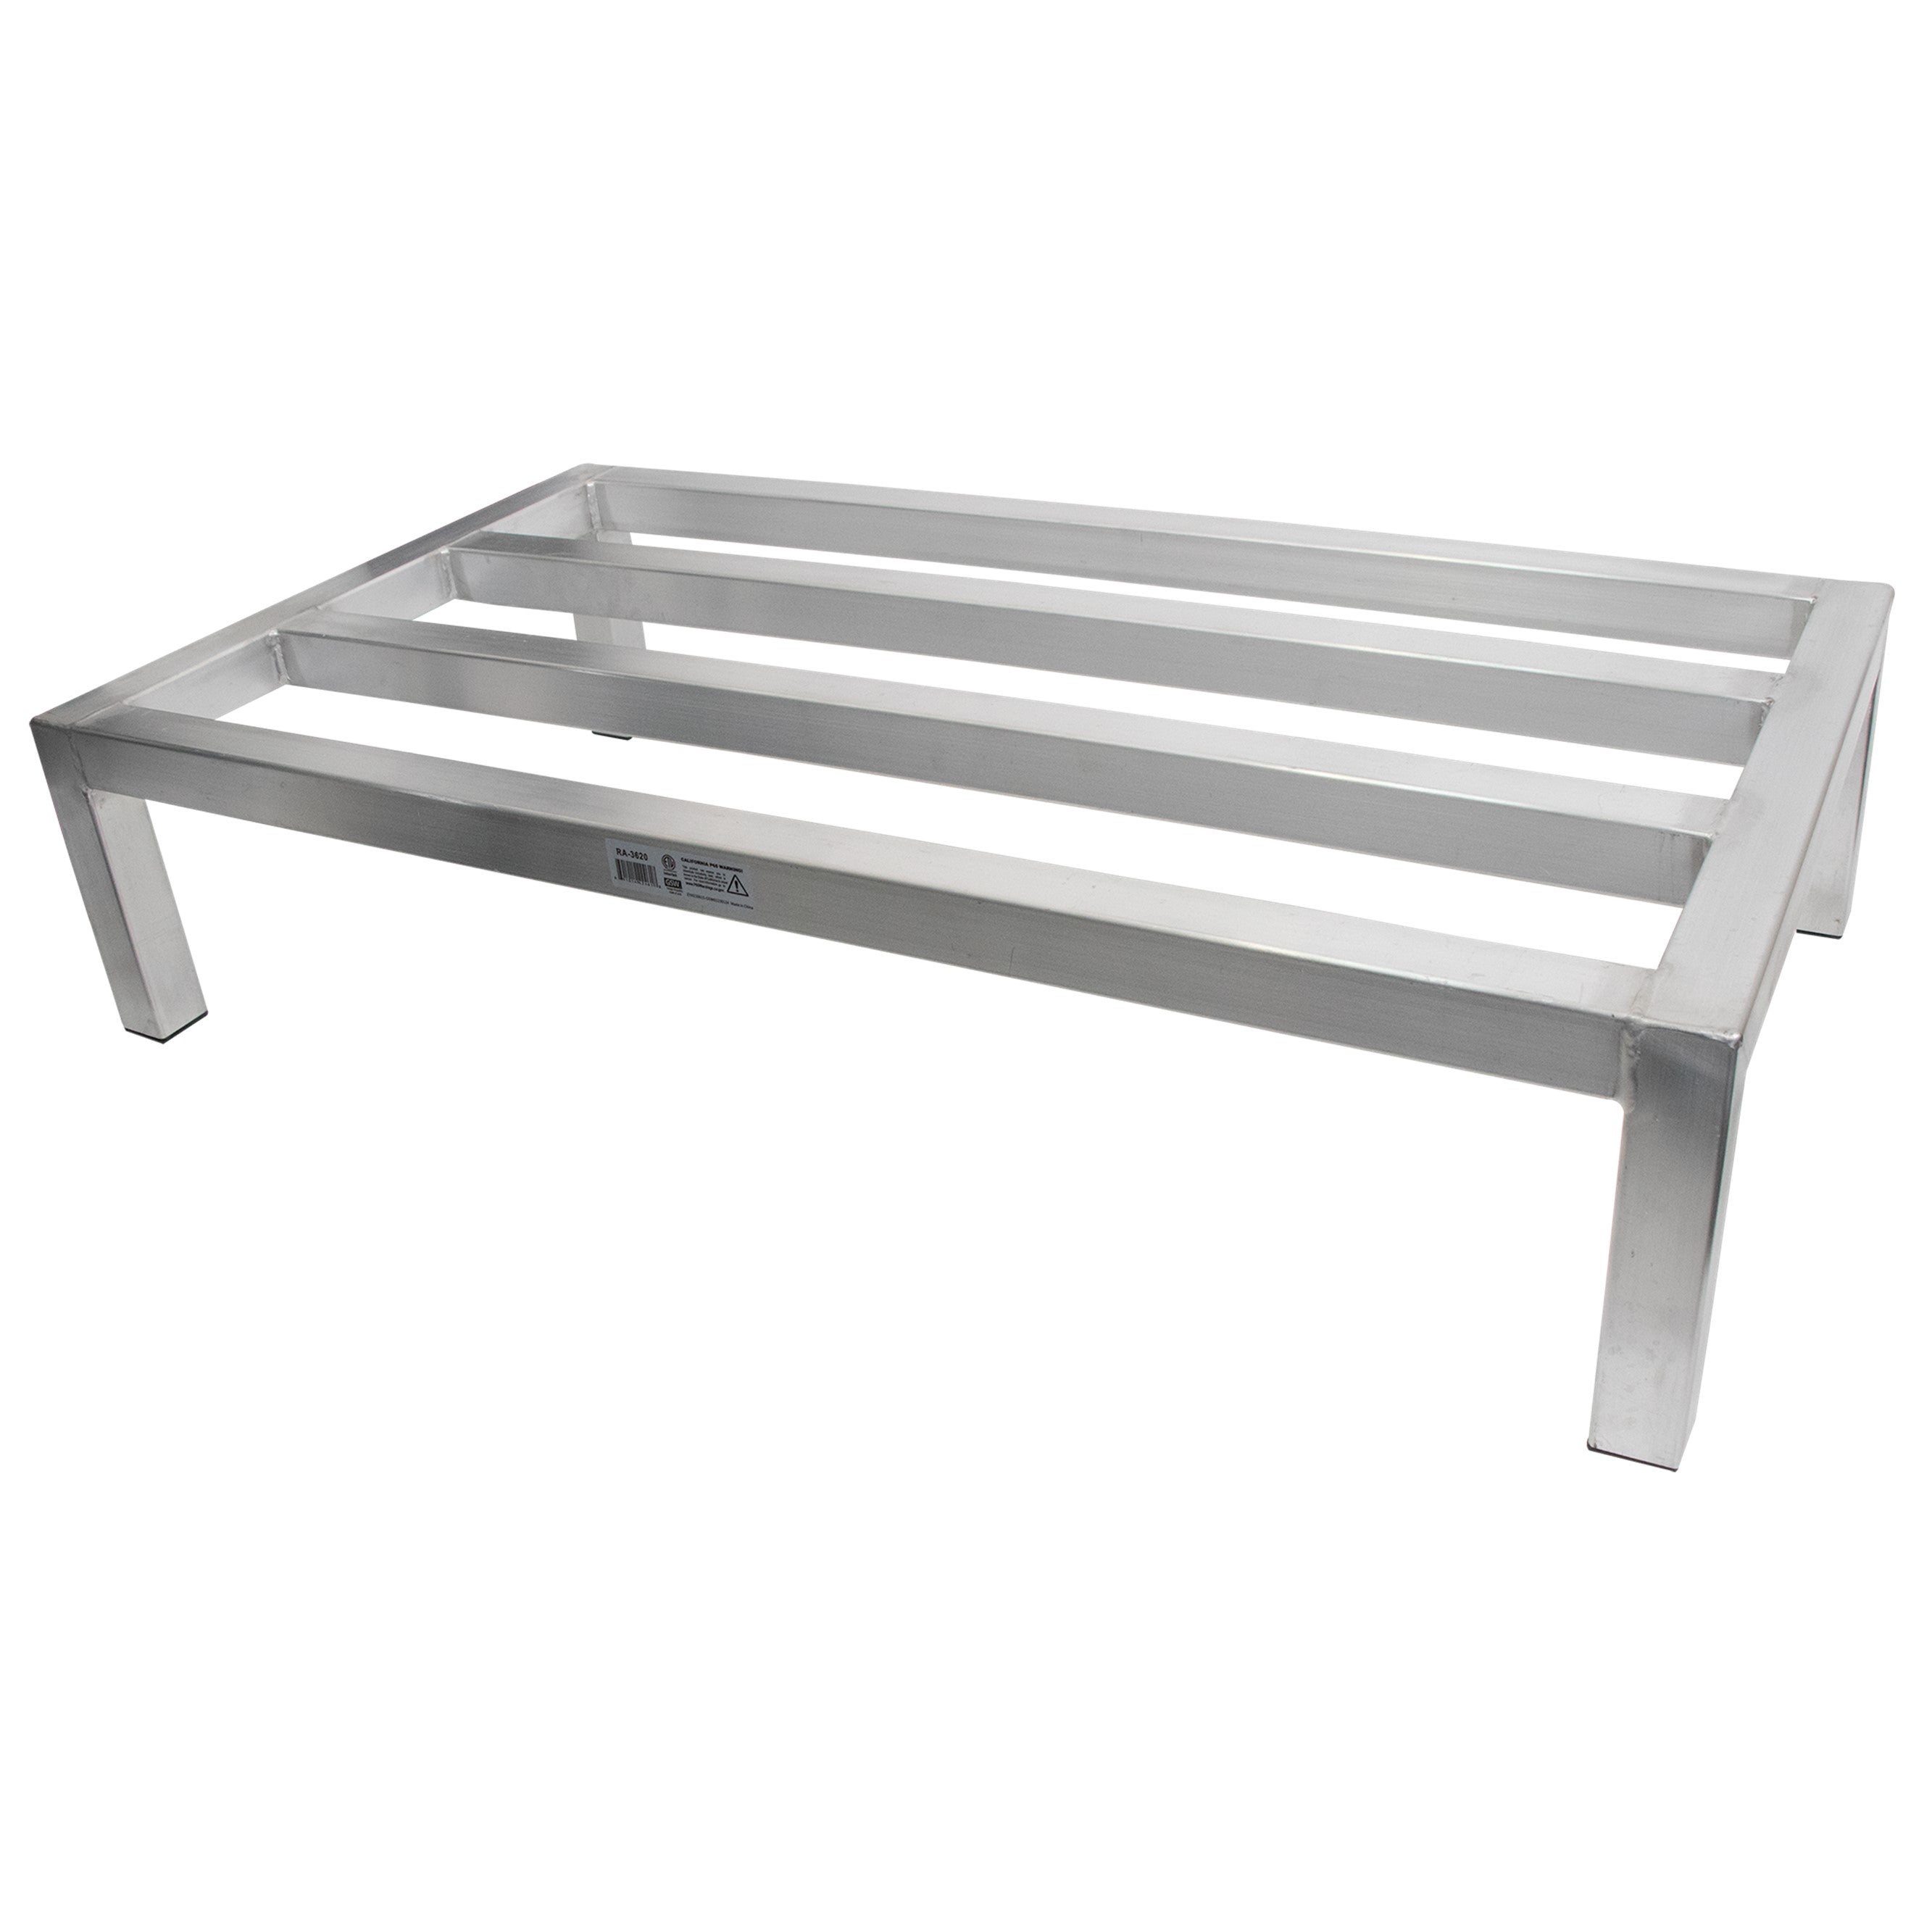 GSW Aluminum All-welded Dunnage Racks. Storage Rack, Floor Food Shelf for Restaurants, Supermarkets, Garages, Stores